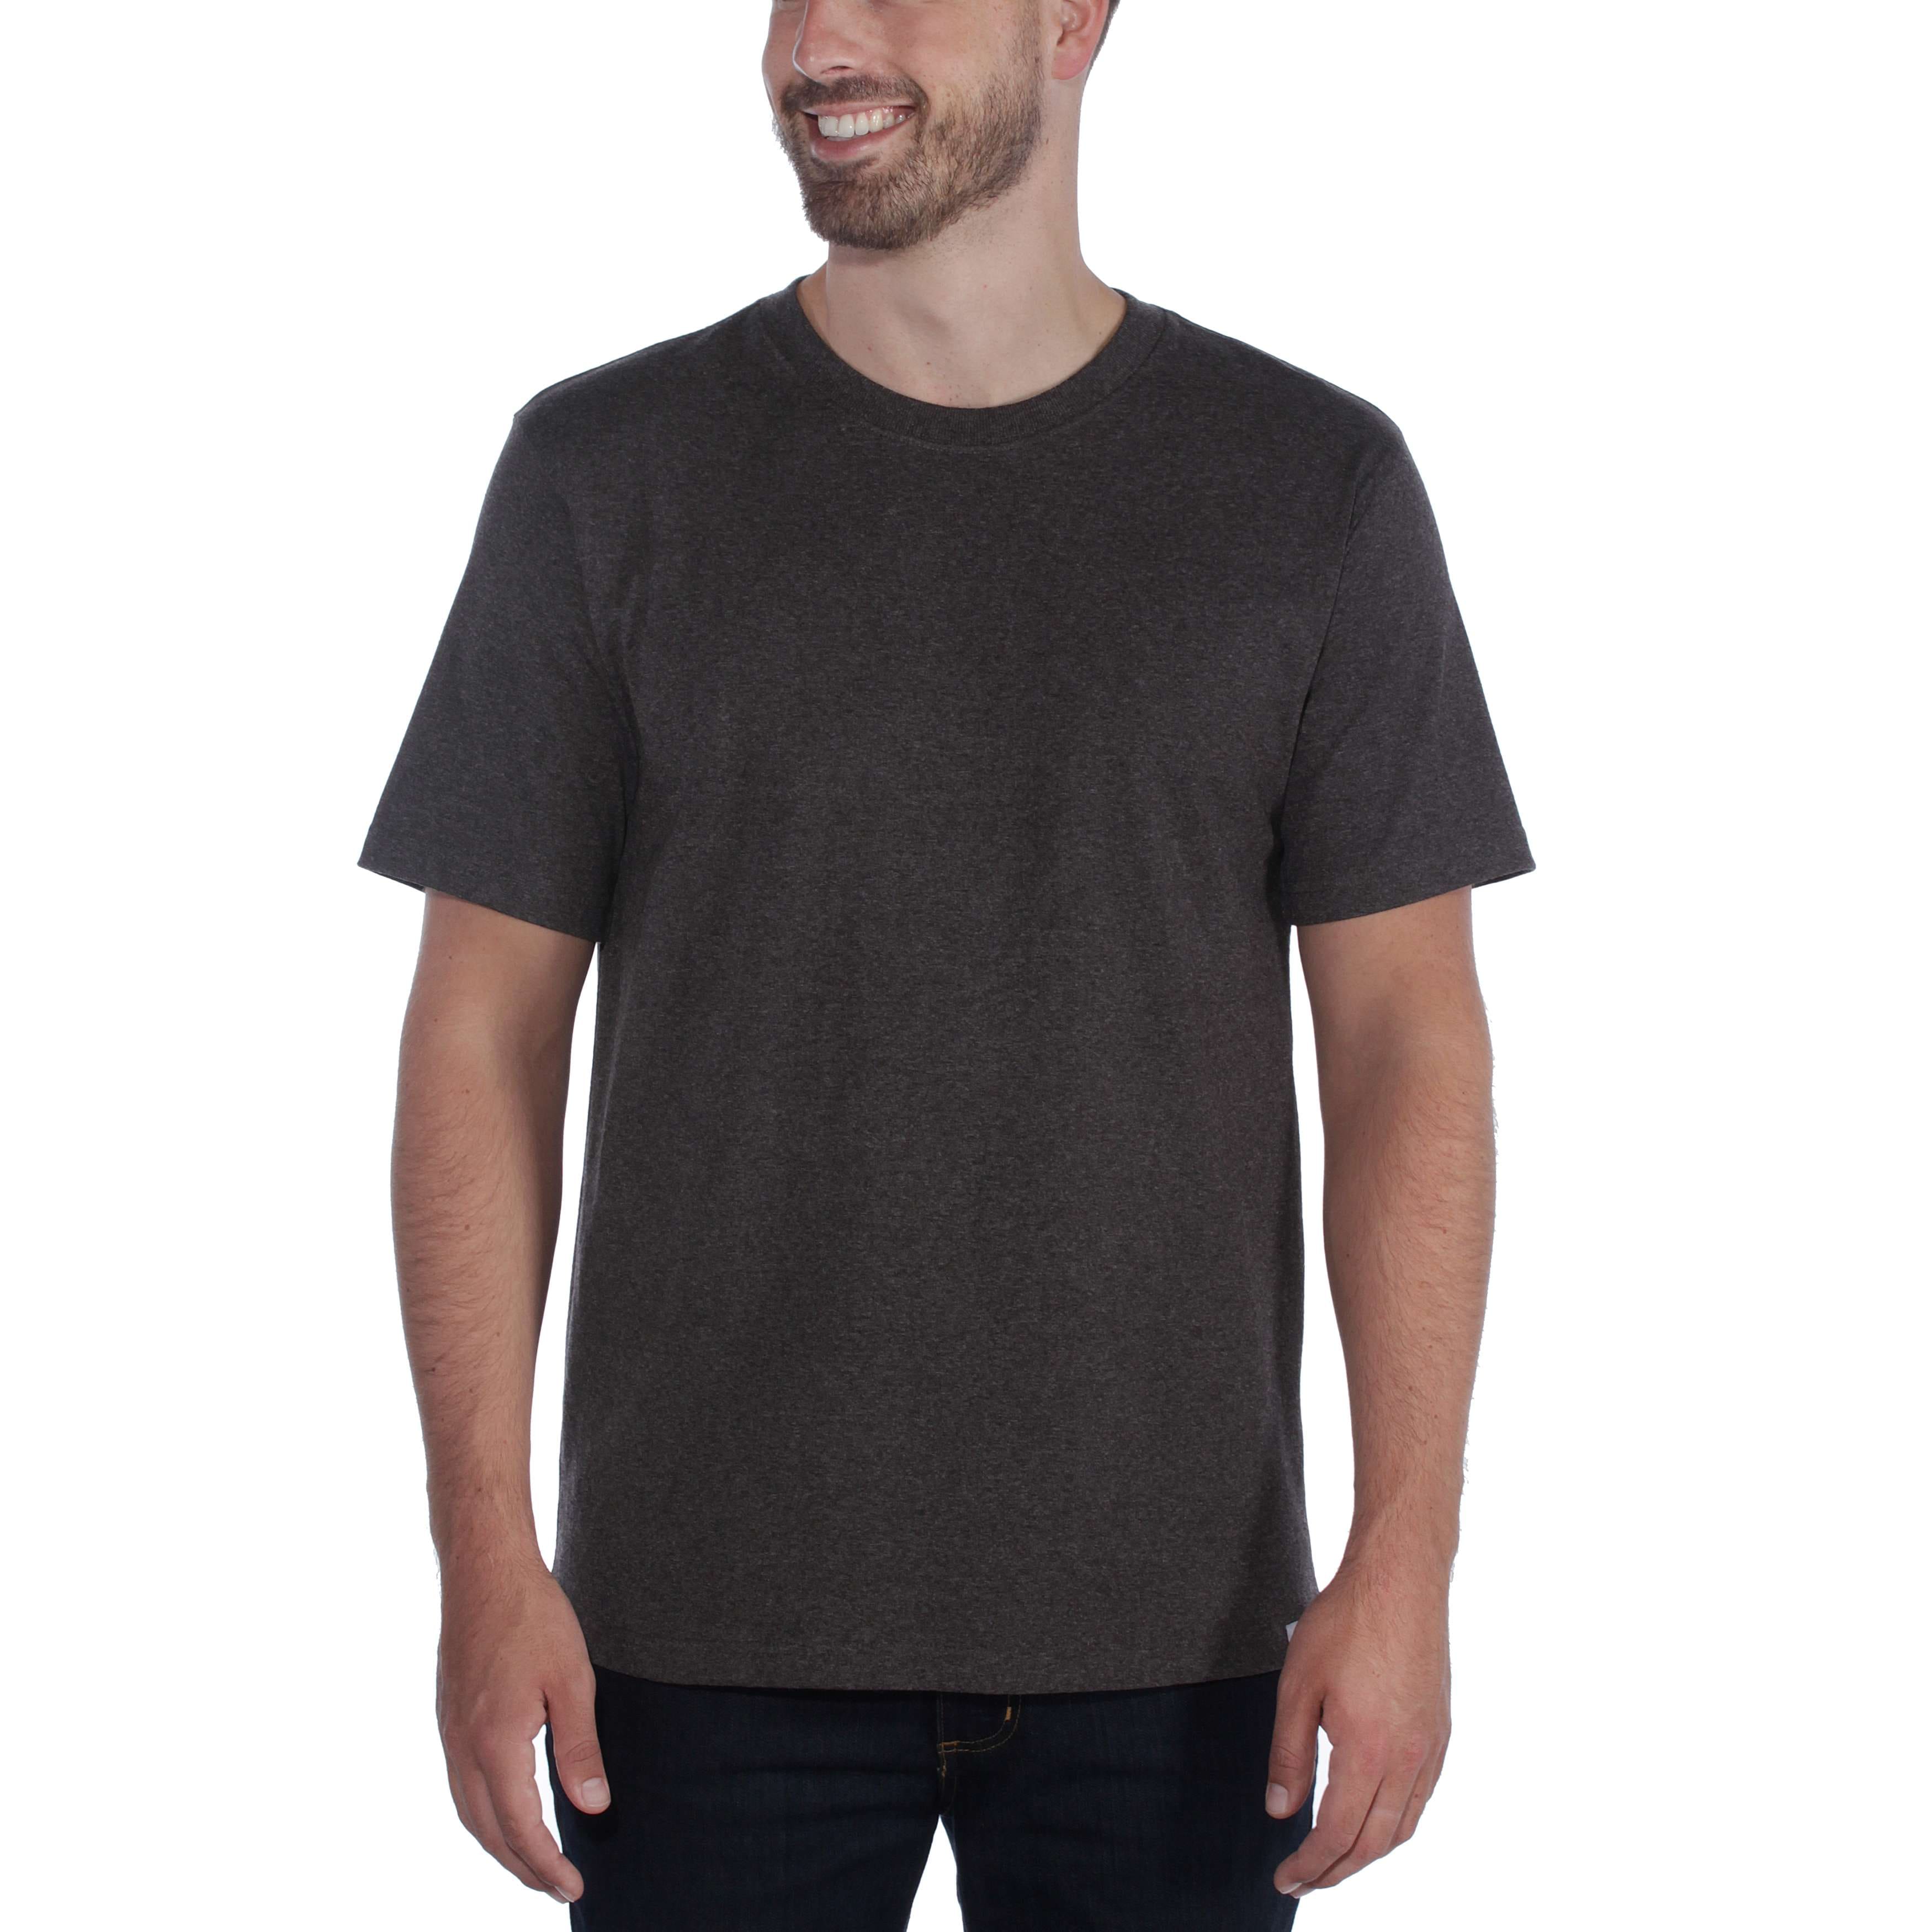 Men\'s Uniform T-shirts & Company Tees for Men | Carhartt Company Gear